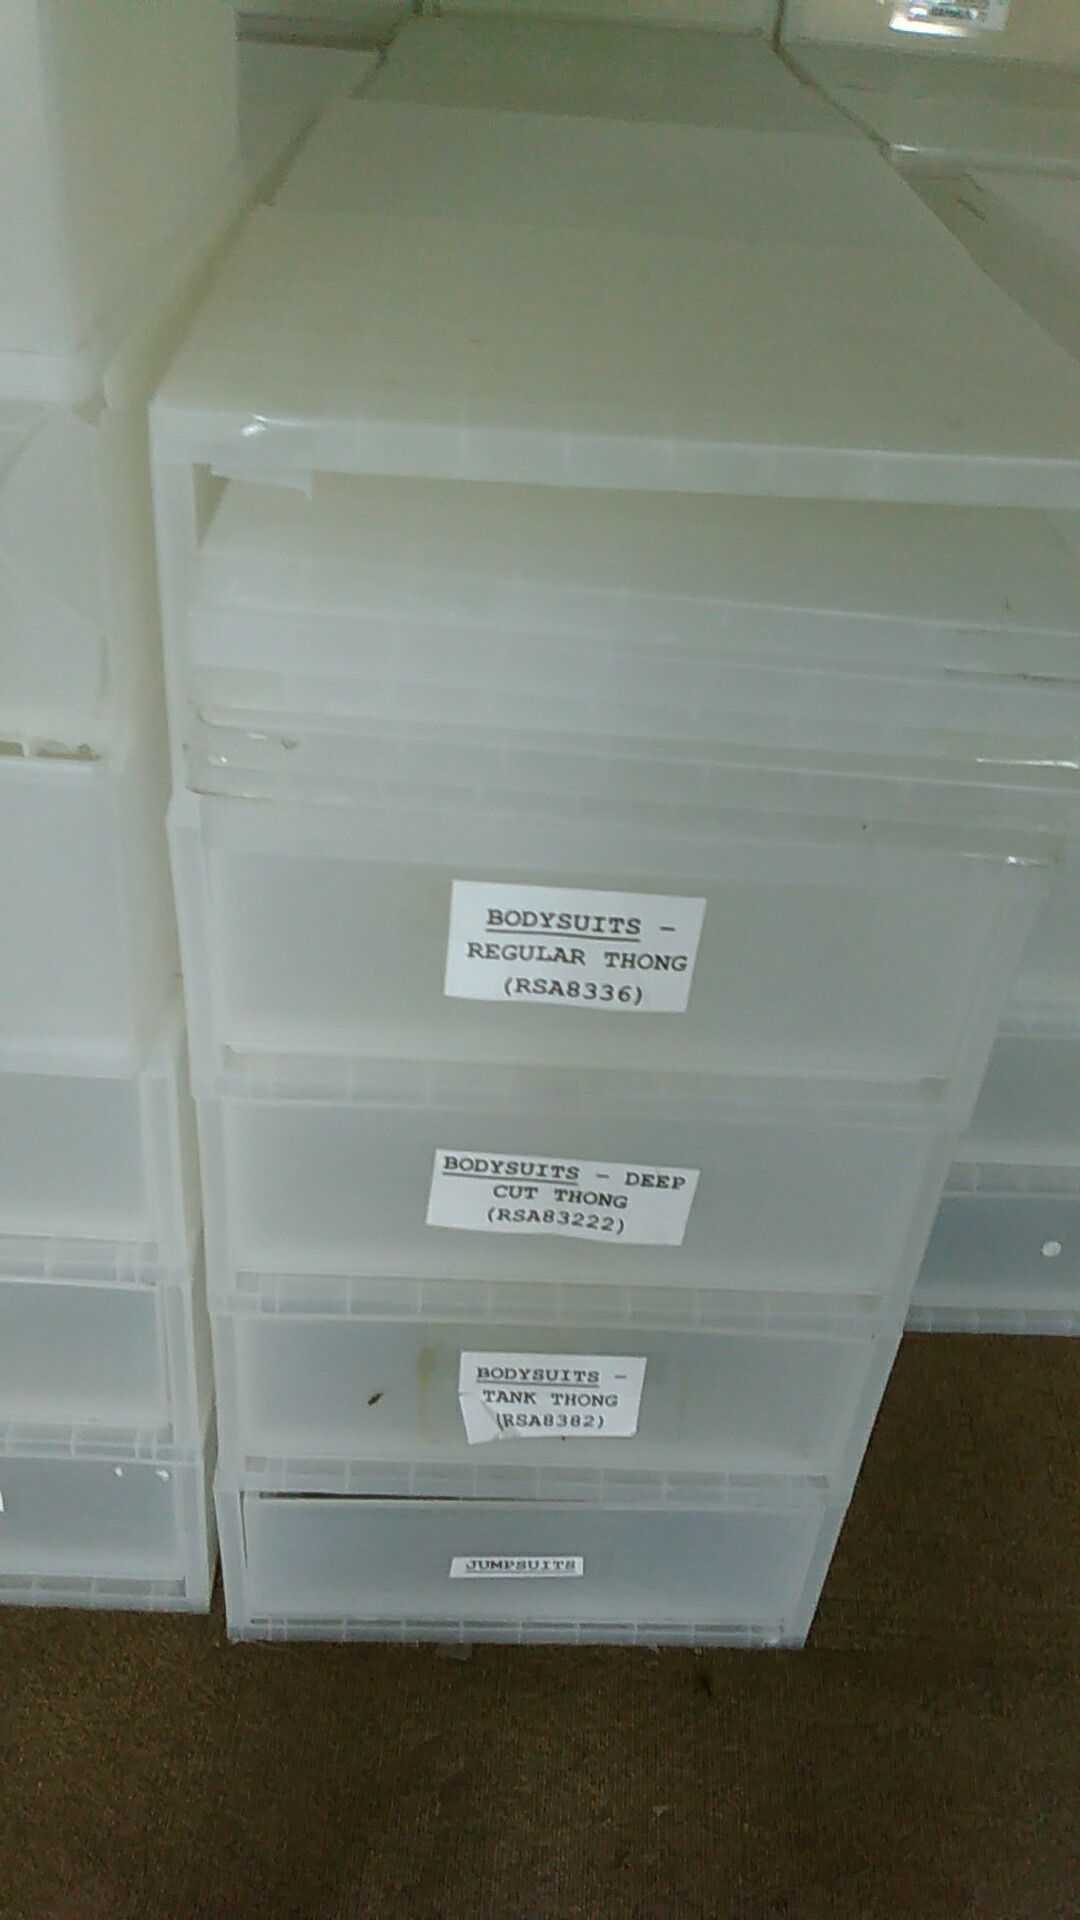 Plastic organizer drawers